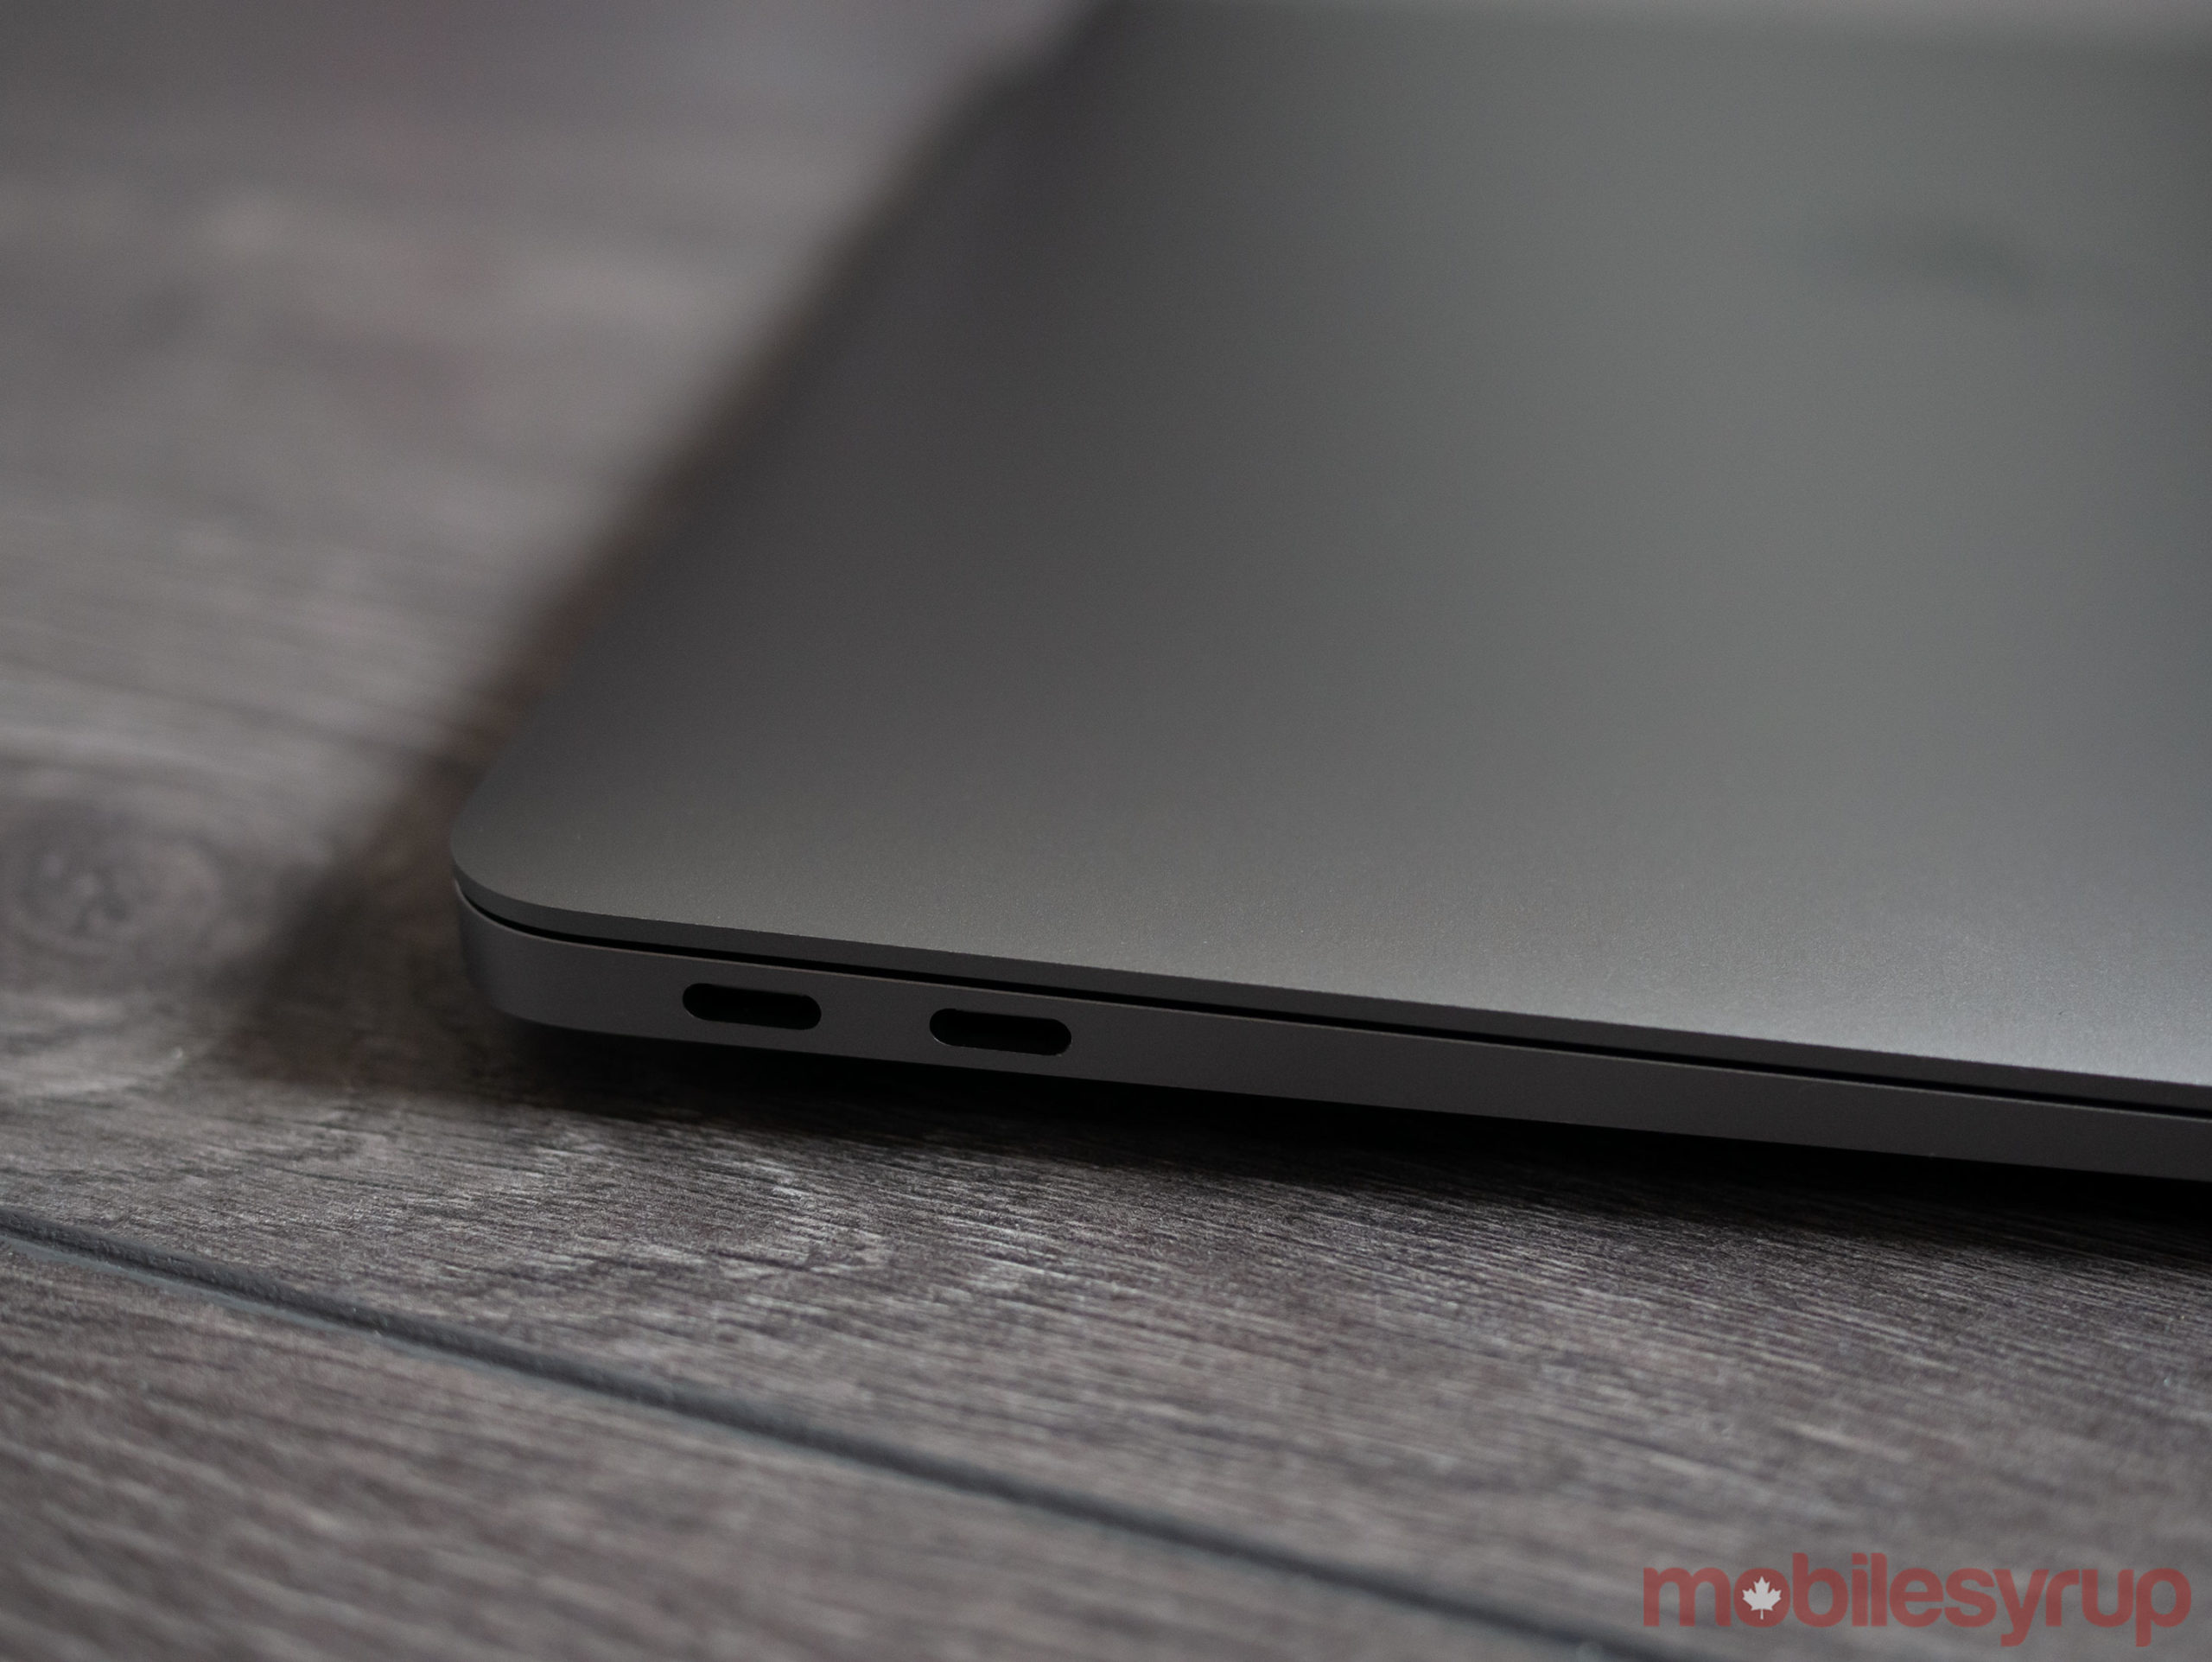 2020 MacBook Air USB-C ports